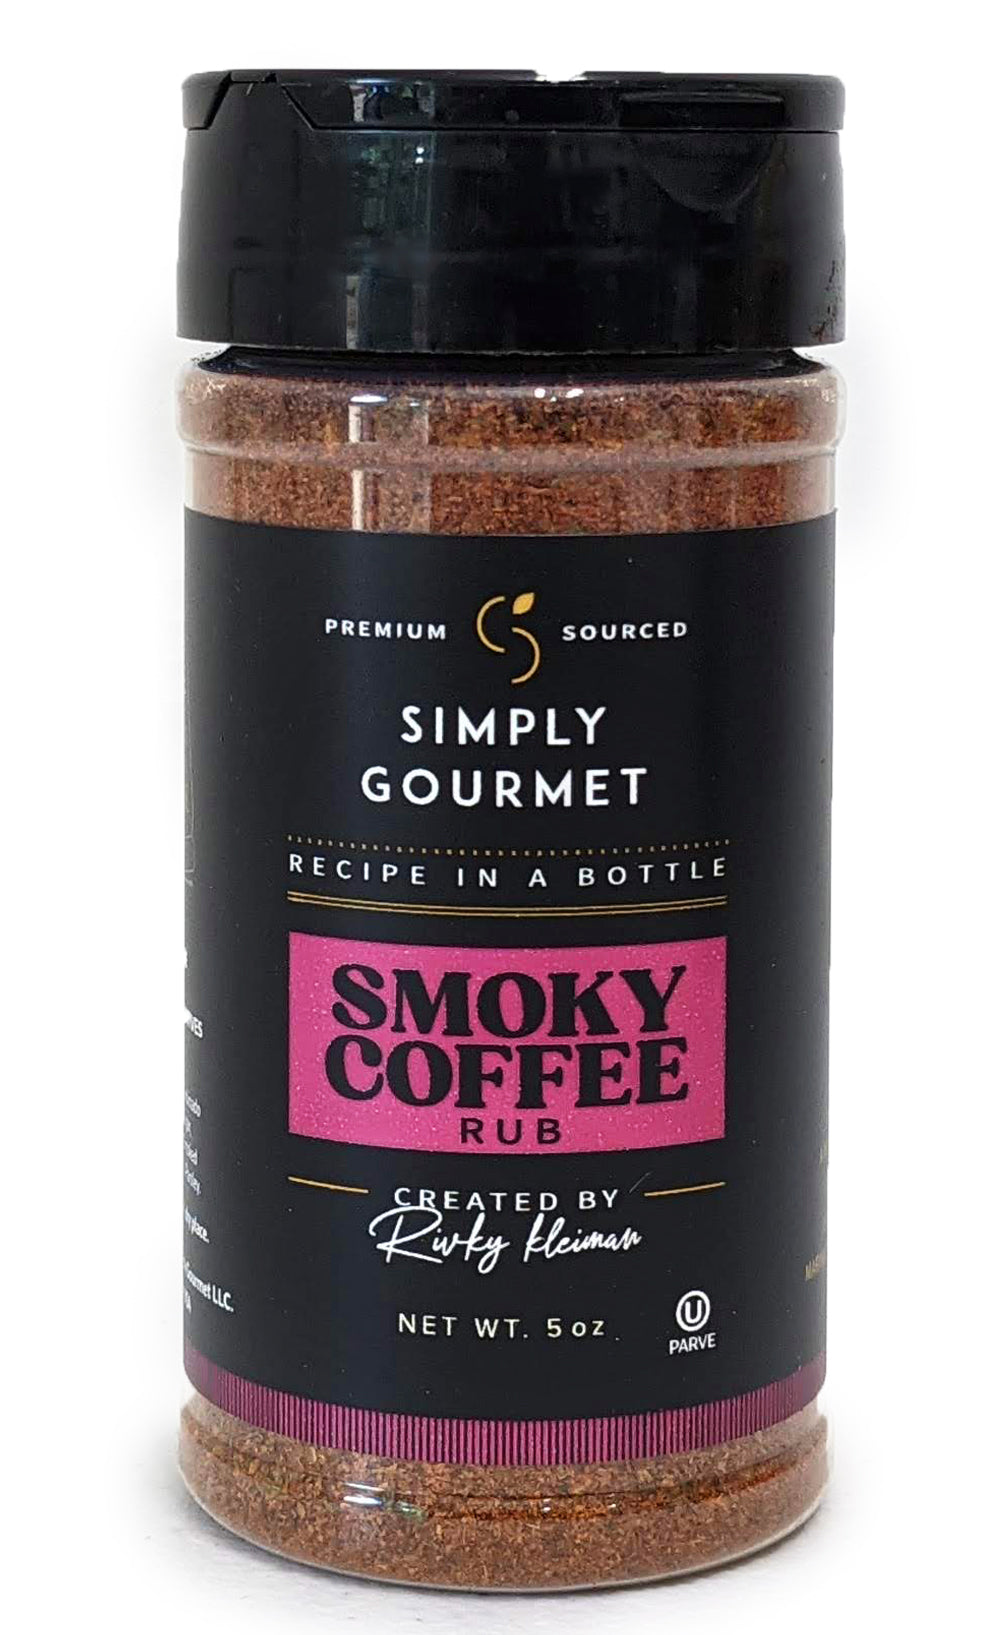 Simply Gourmet, Smoky Coffee Rub, created by Rivky Kleiman